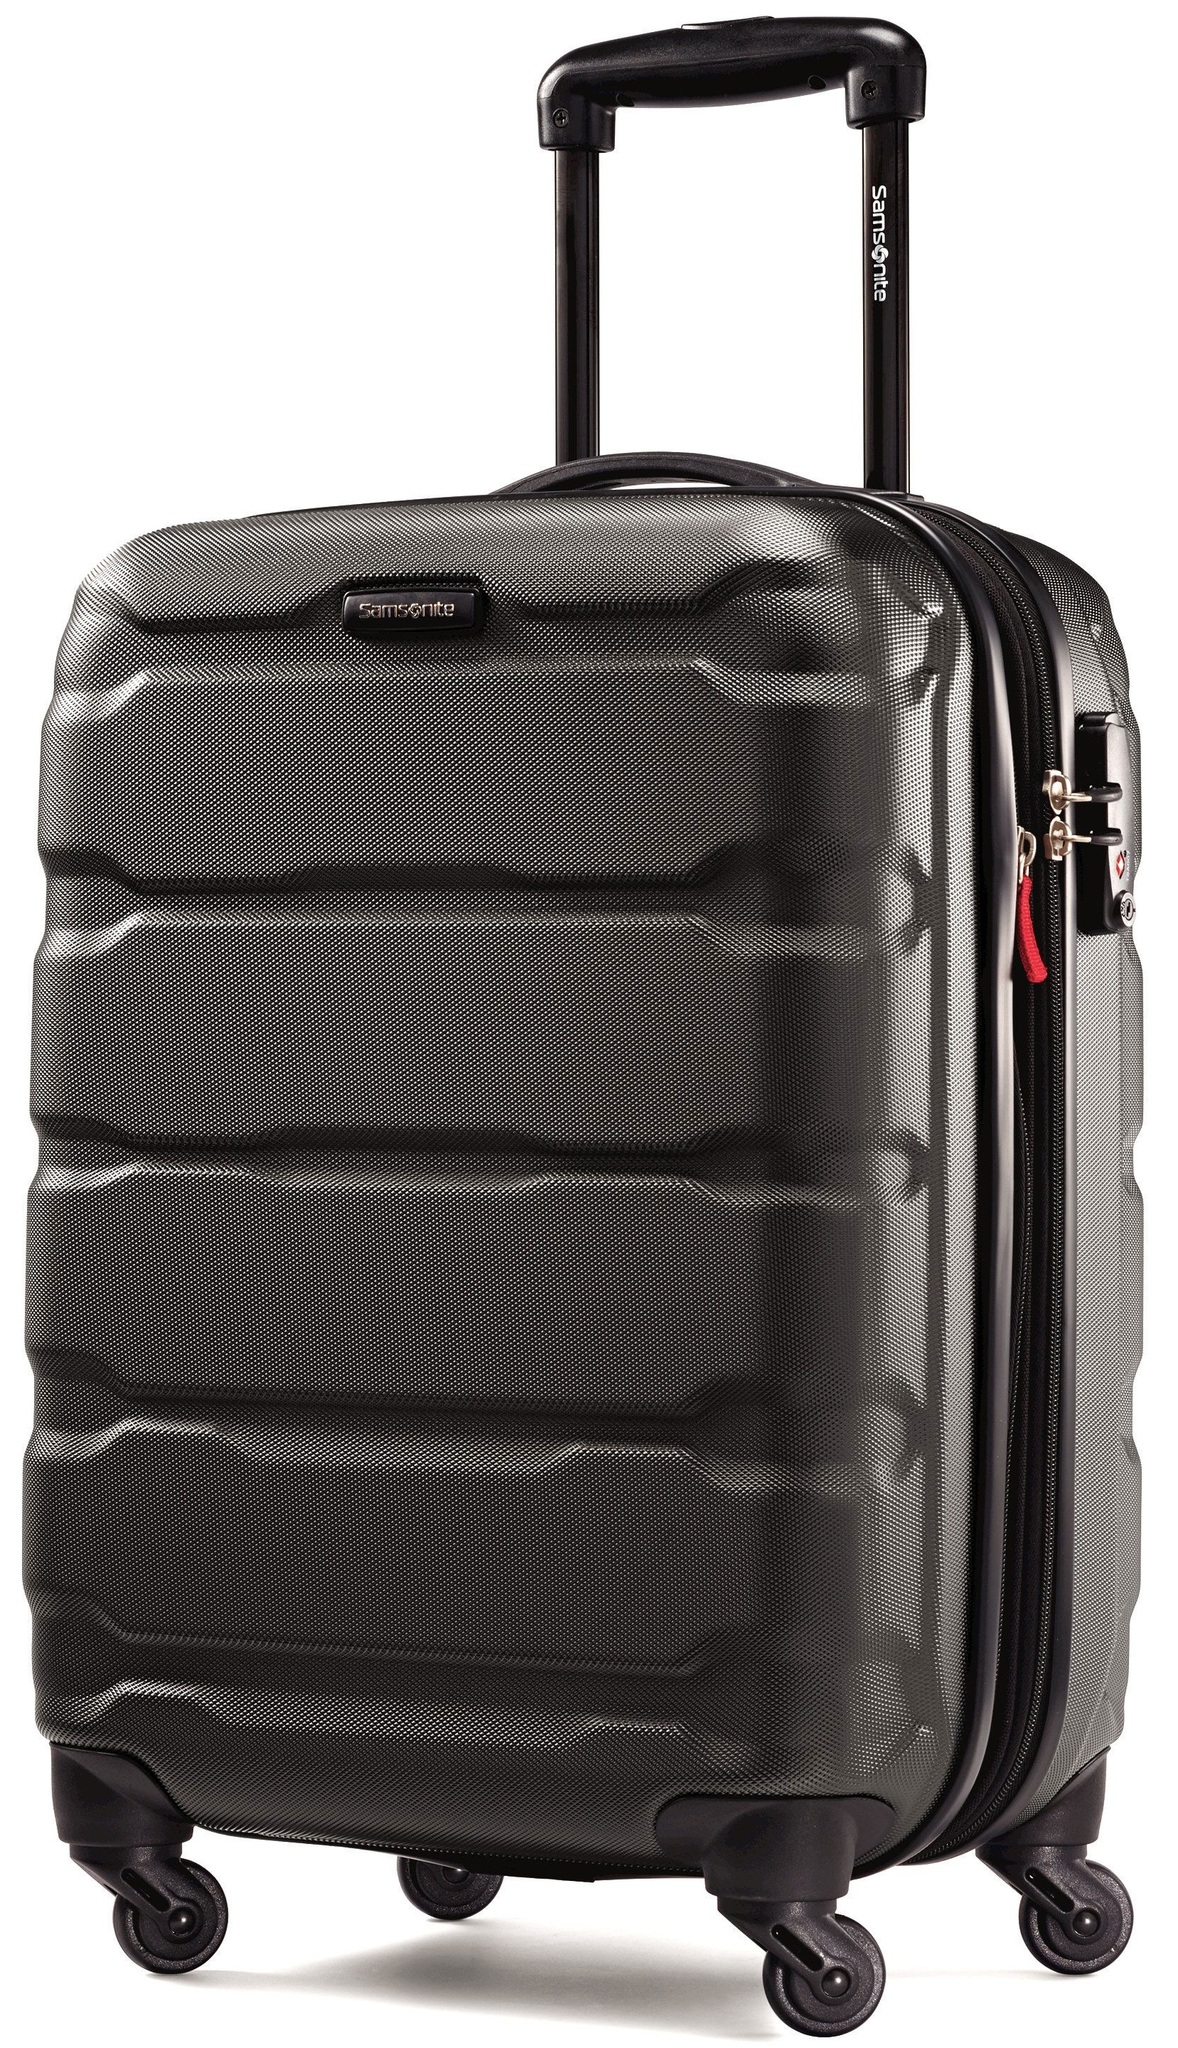 Samsonite Omni Pc Spinner Travel Case Luggage